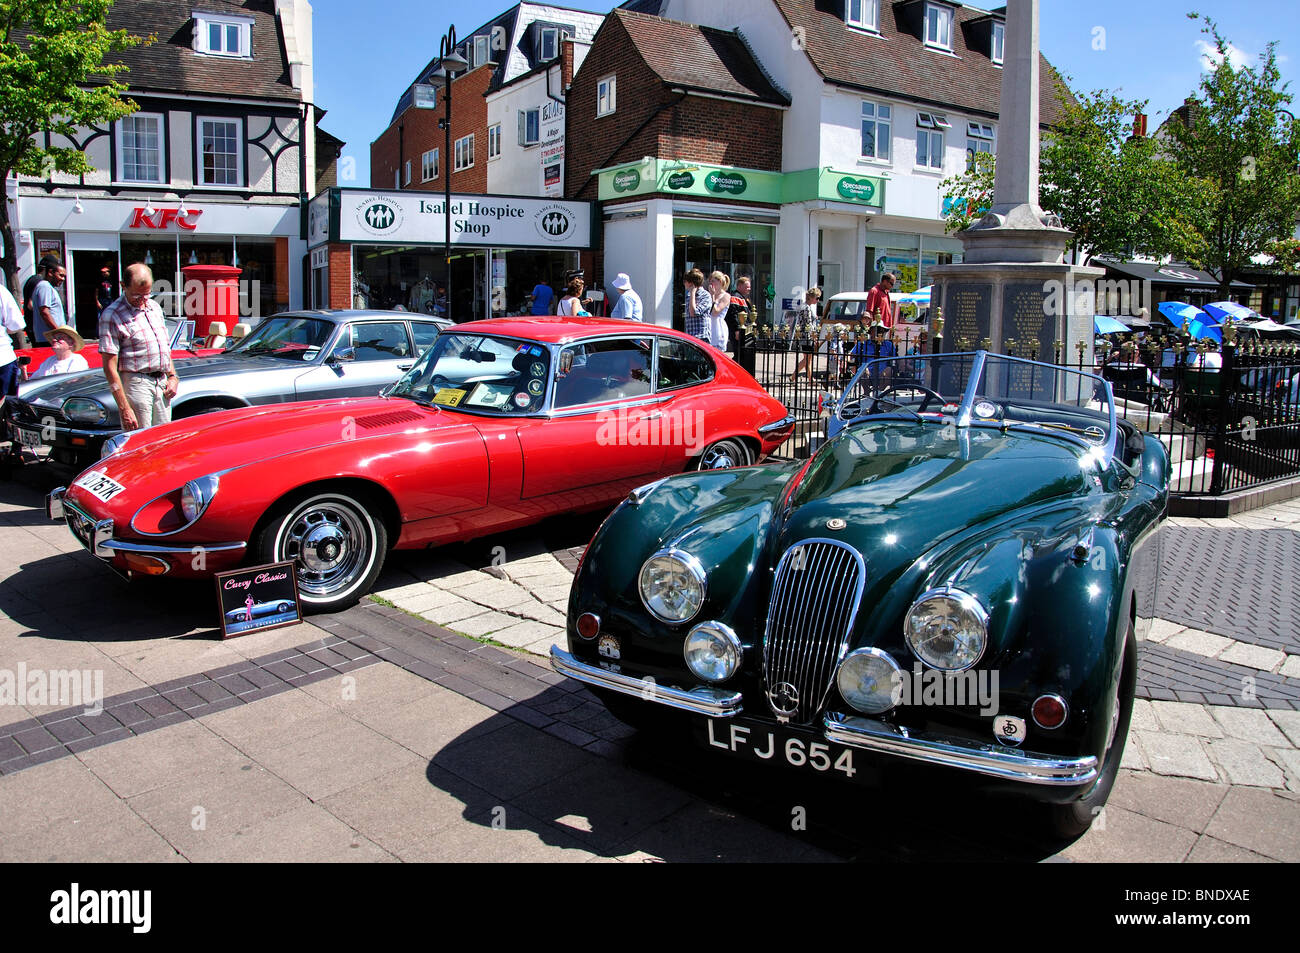 Rallye de voitures classiques, High Street, Hoddesdon, Hertfordshire, Angleterre, Royaume-Uni Banque D'Images